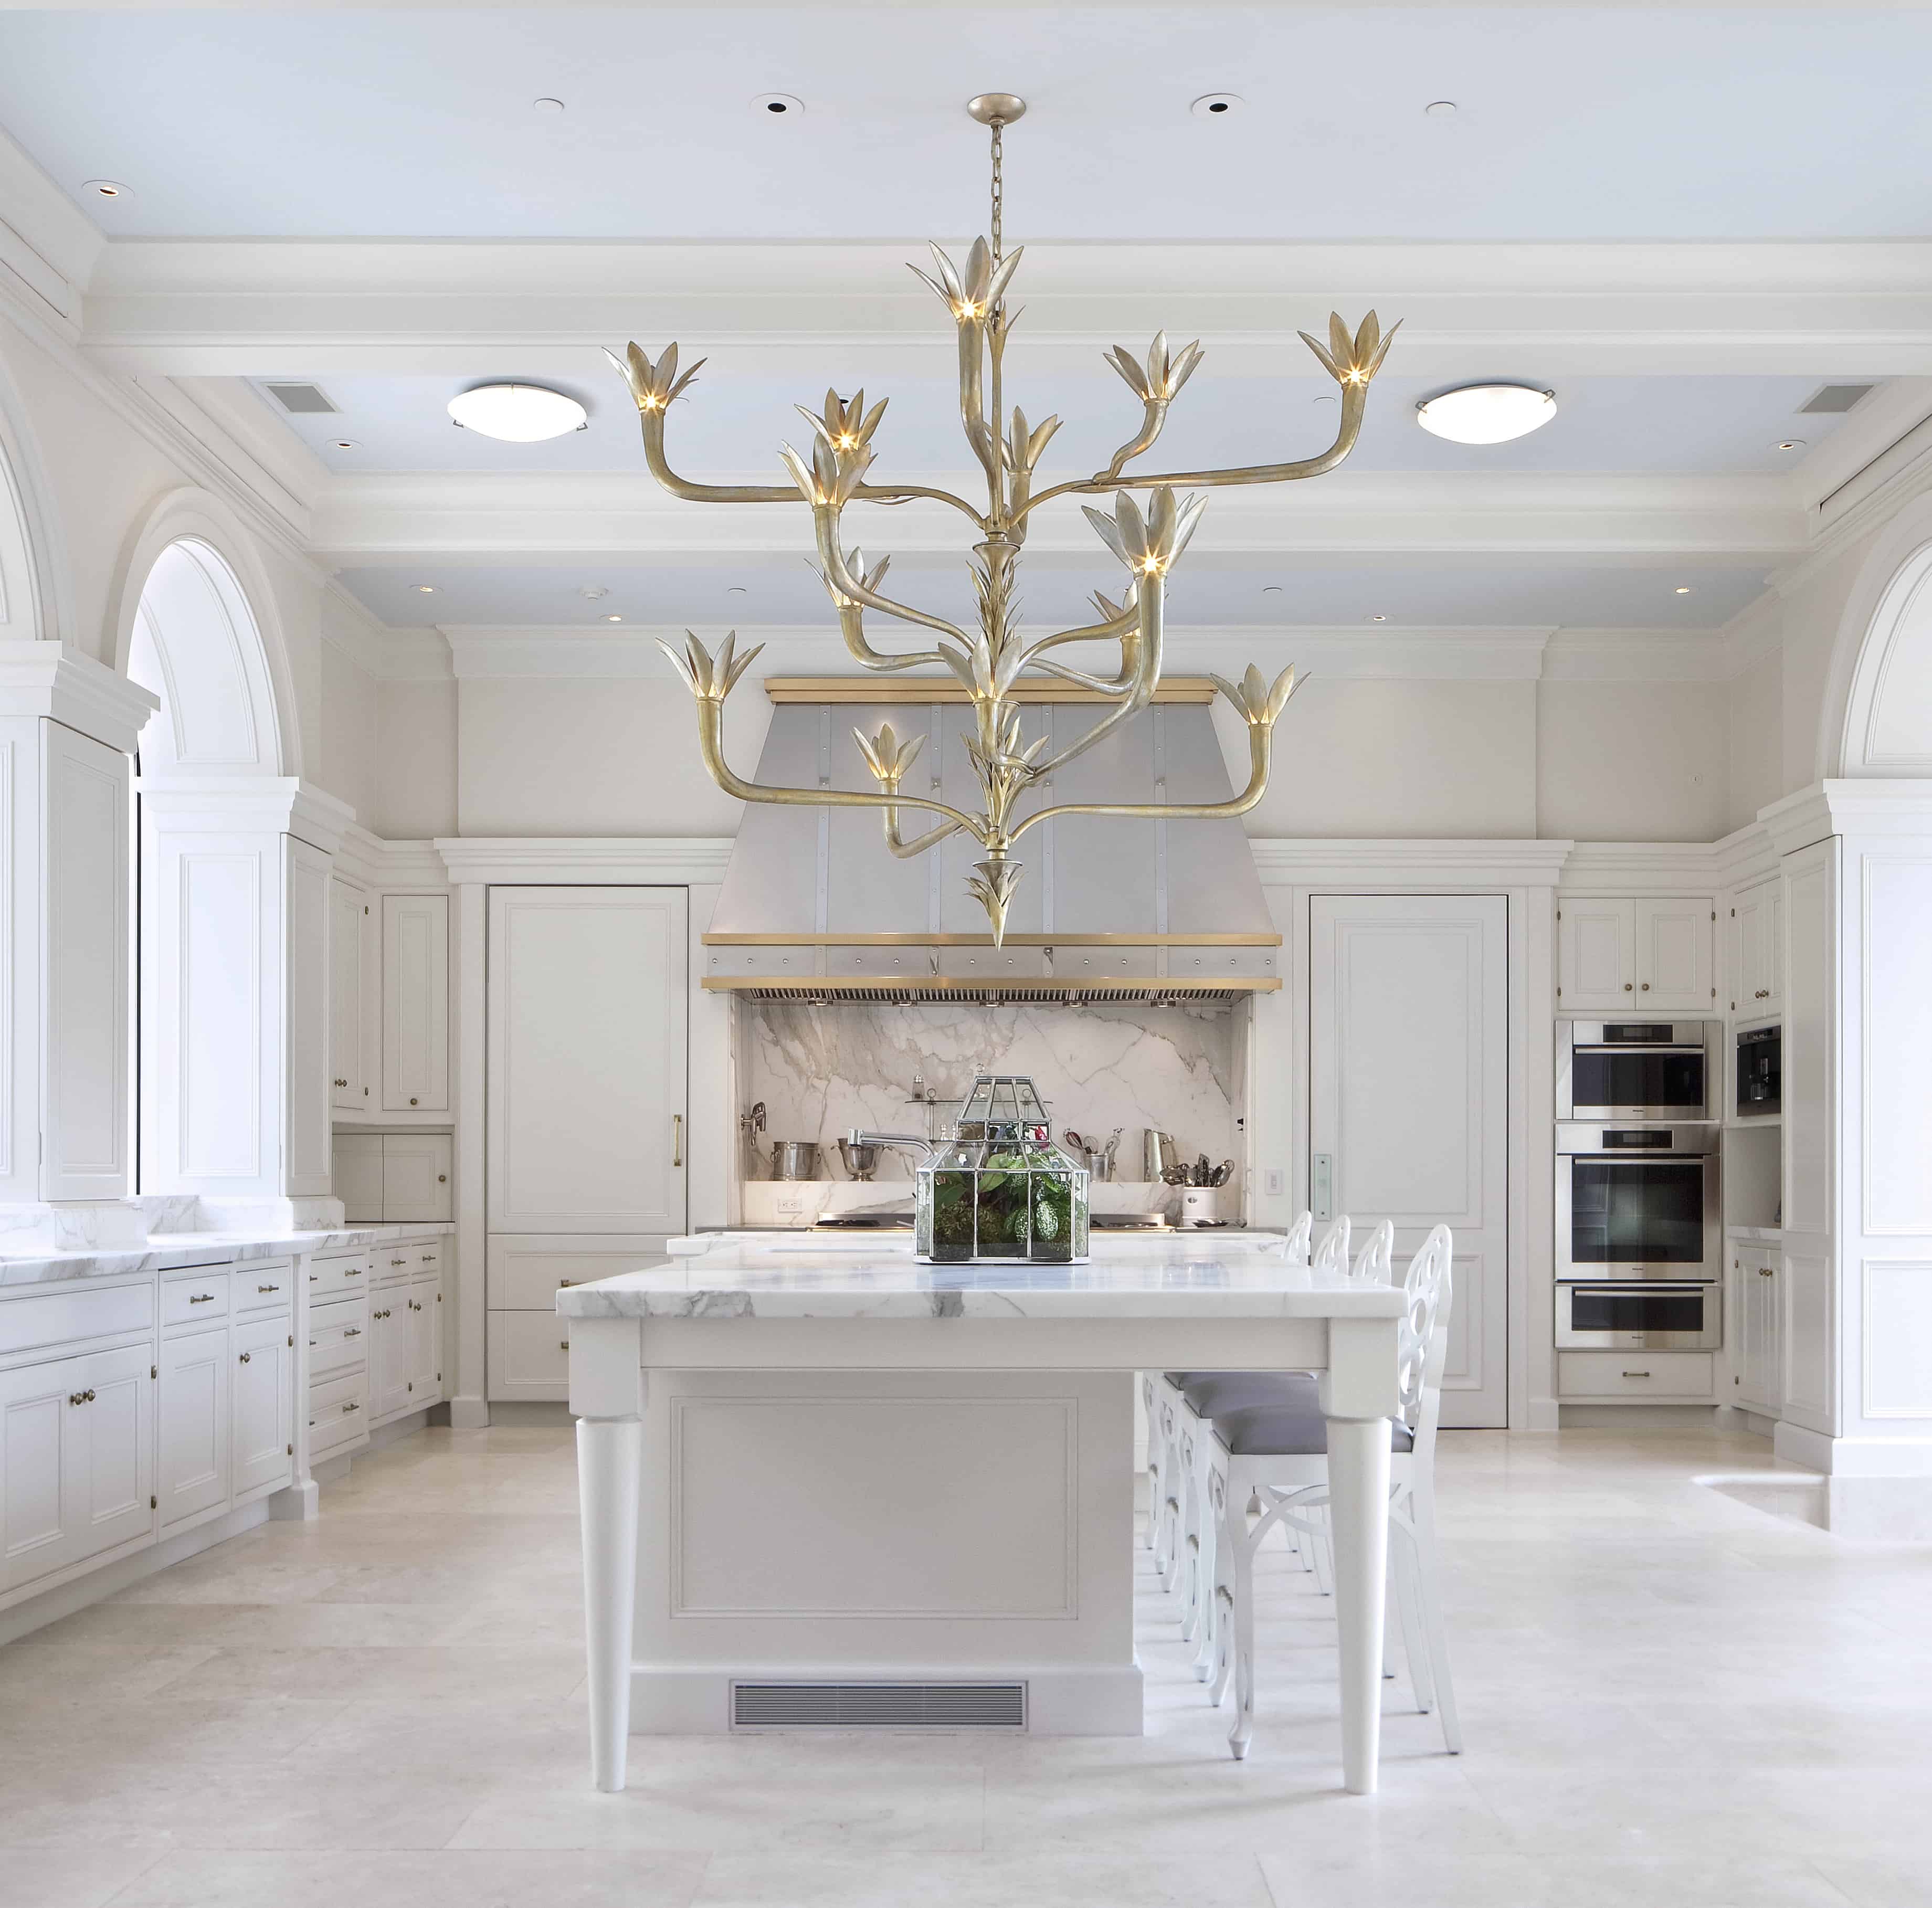 minimal kitchen with intricate lighting